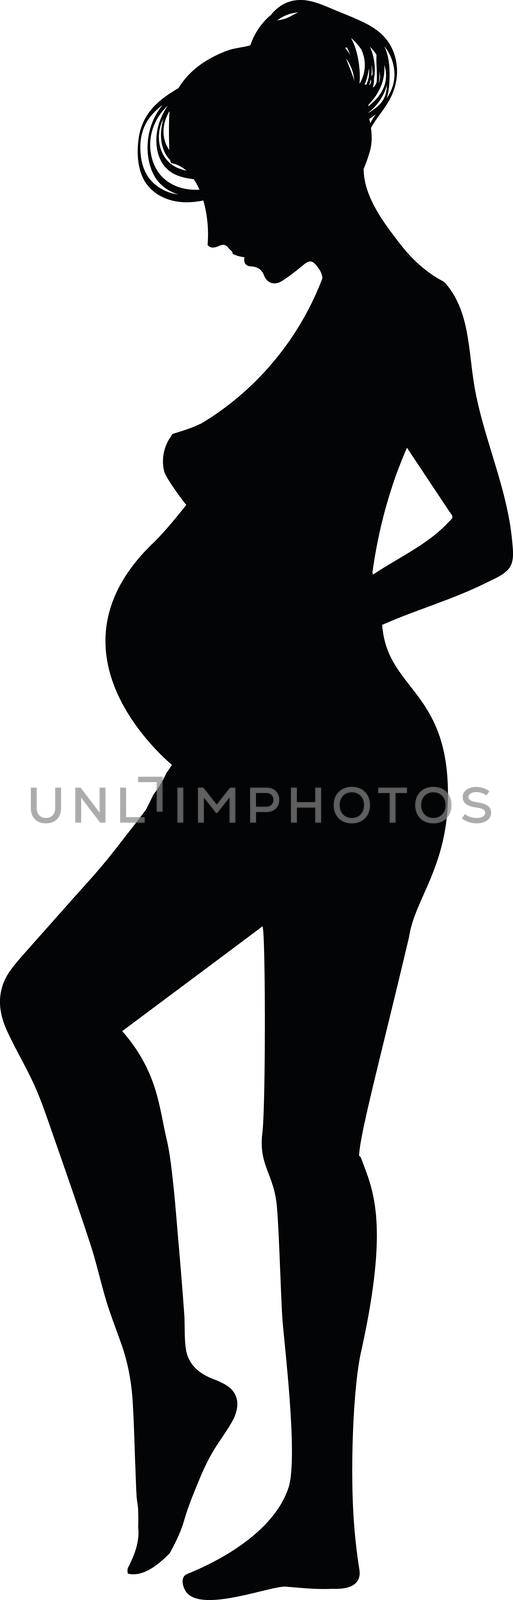 Pregnant Girl Showing Her Belly Vector Illustration